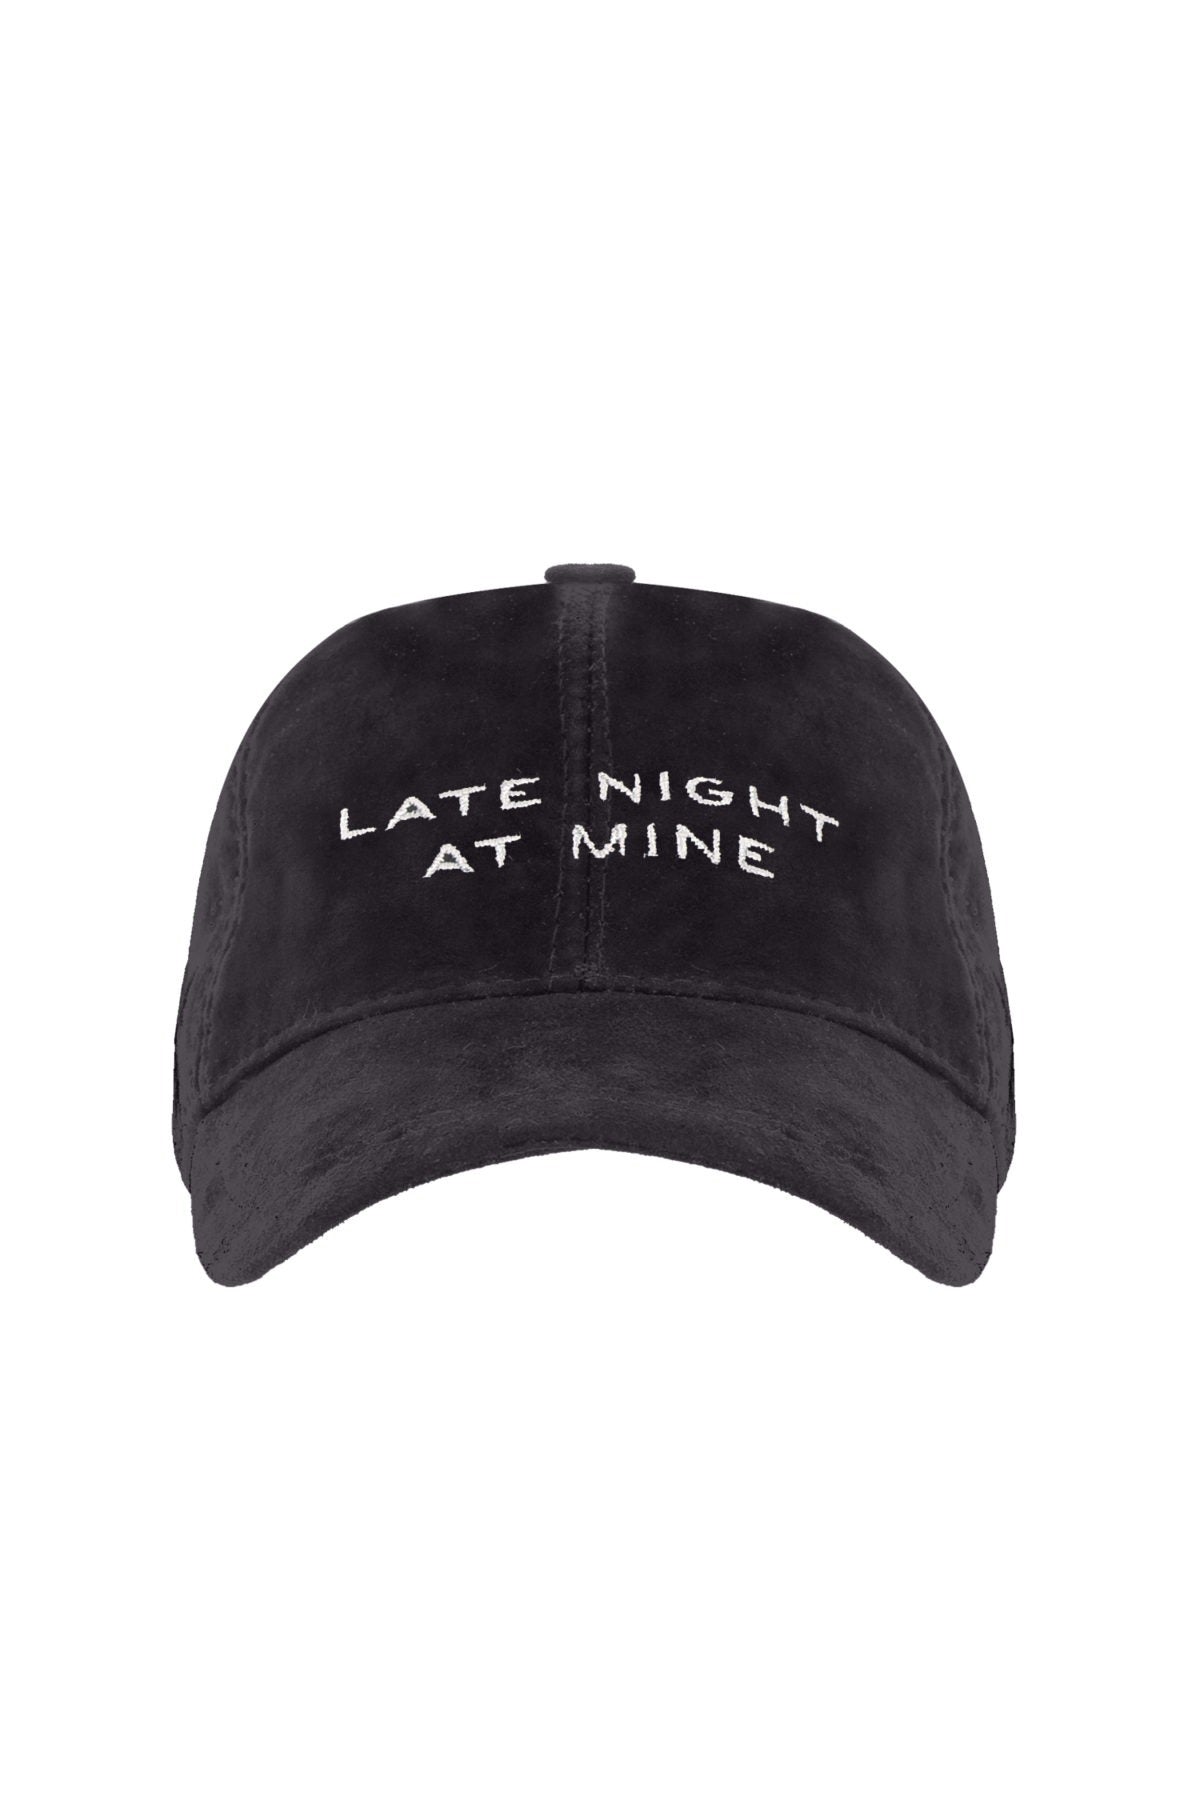 Late Night At Mine - Dark Grey